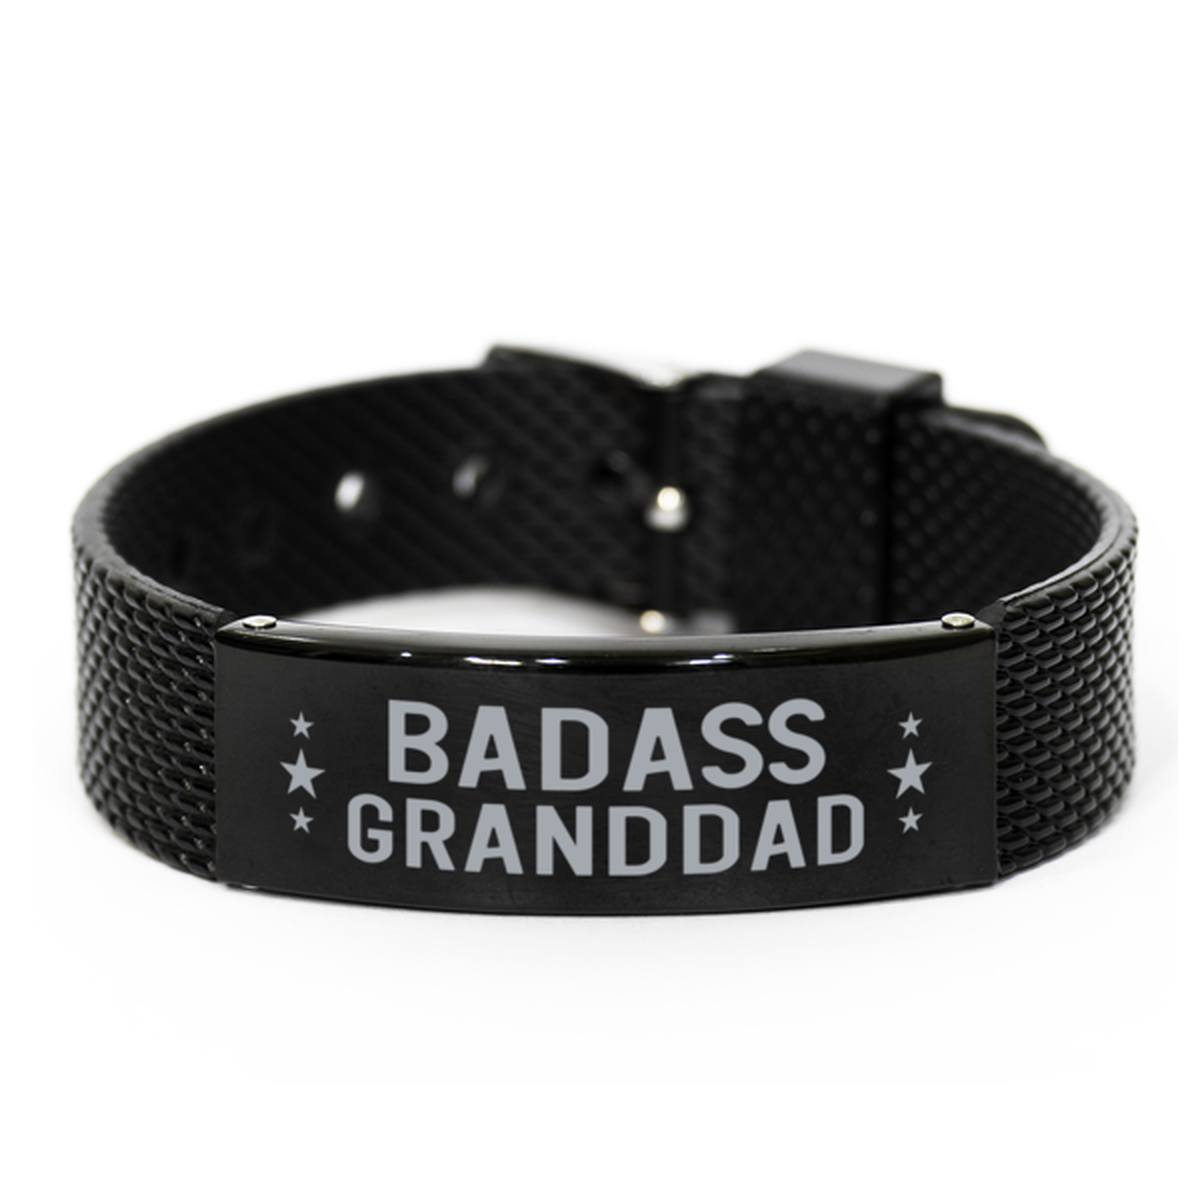 Granddad Black Shark Mesh Bracelet, Badass Granddad, Funny Family Gifts For Granddad From Granddaughter Grandson